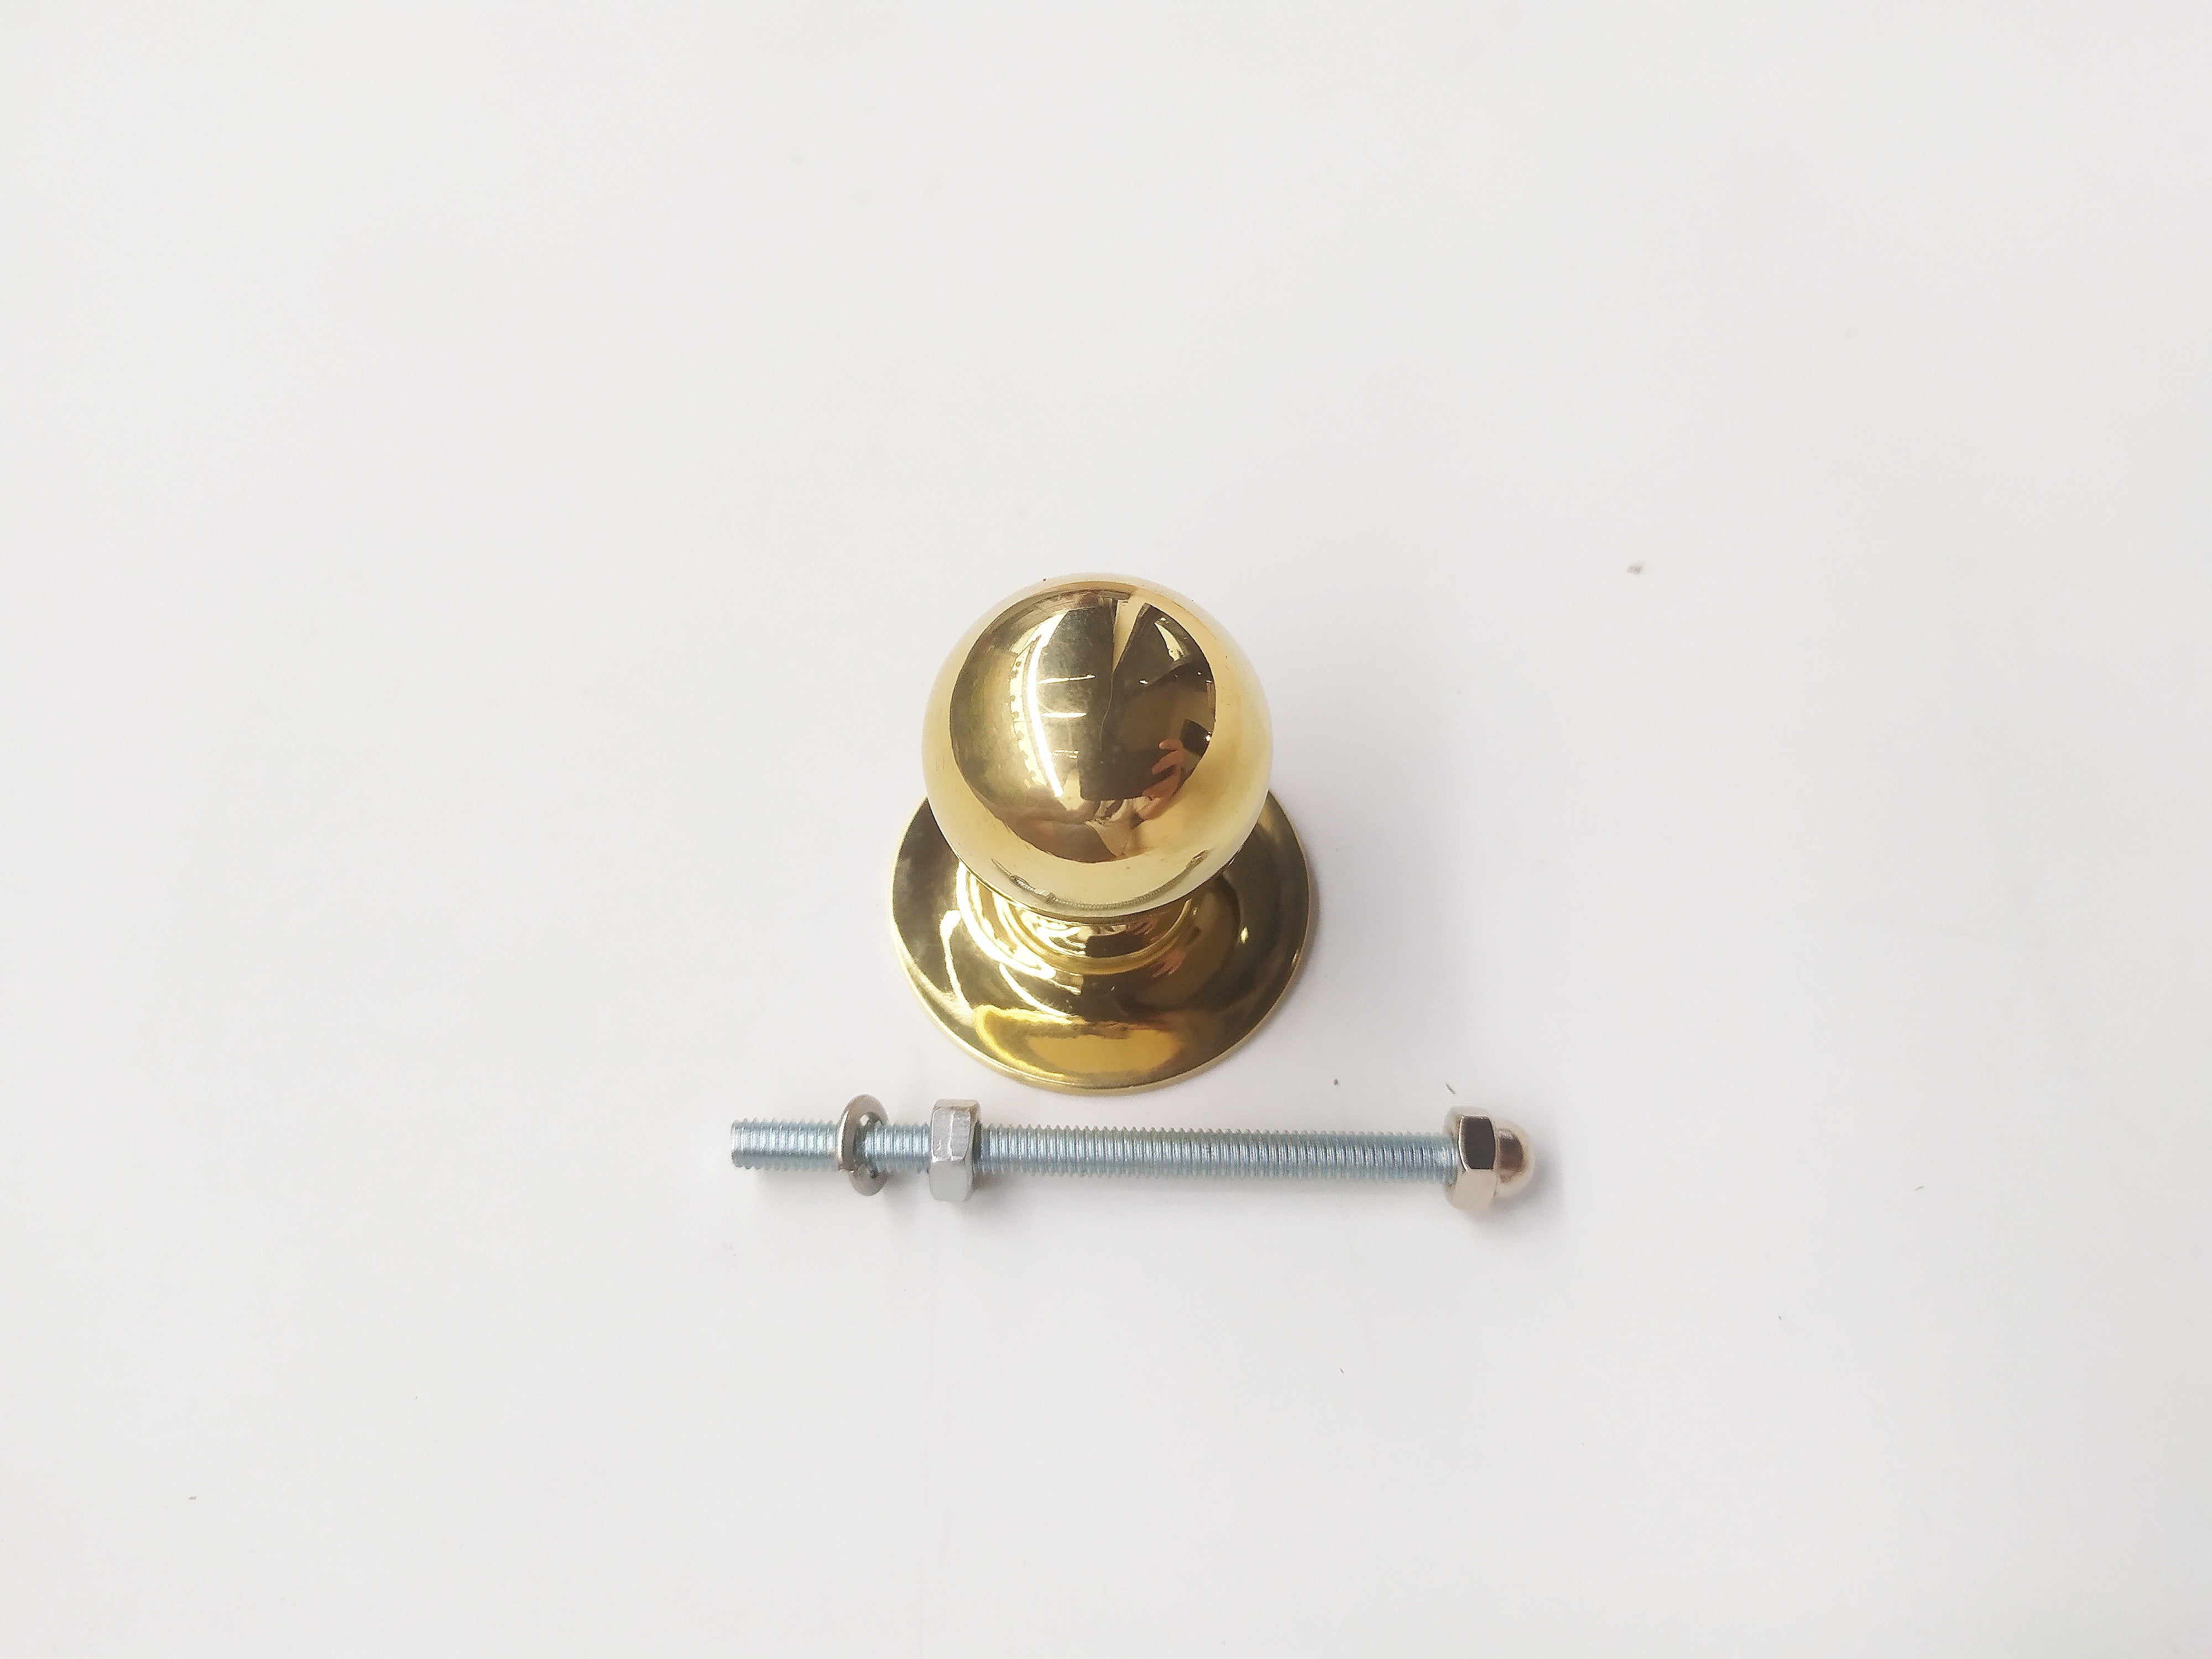 Solid Brass Polished  Knob - Brass Round Ball Cabinet Knob - set of 2.